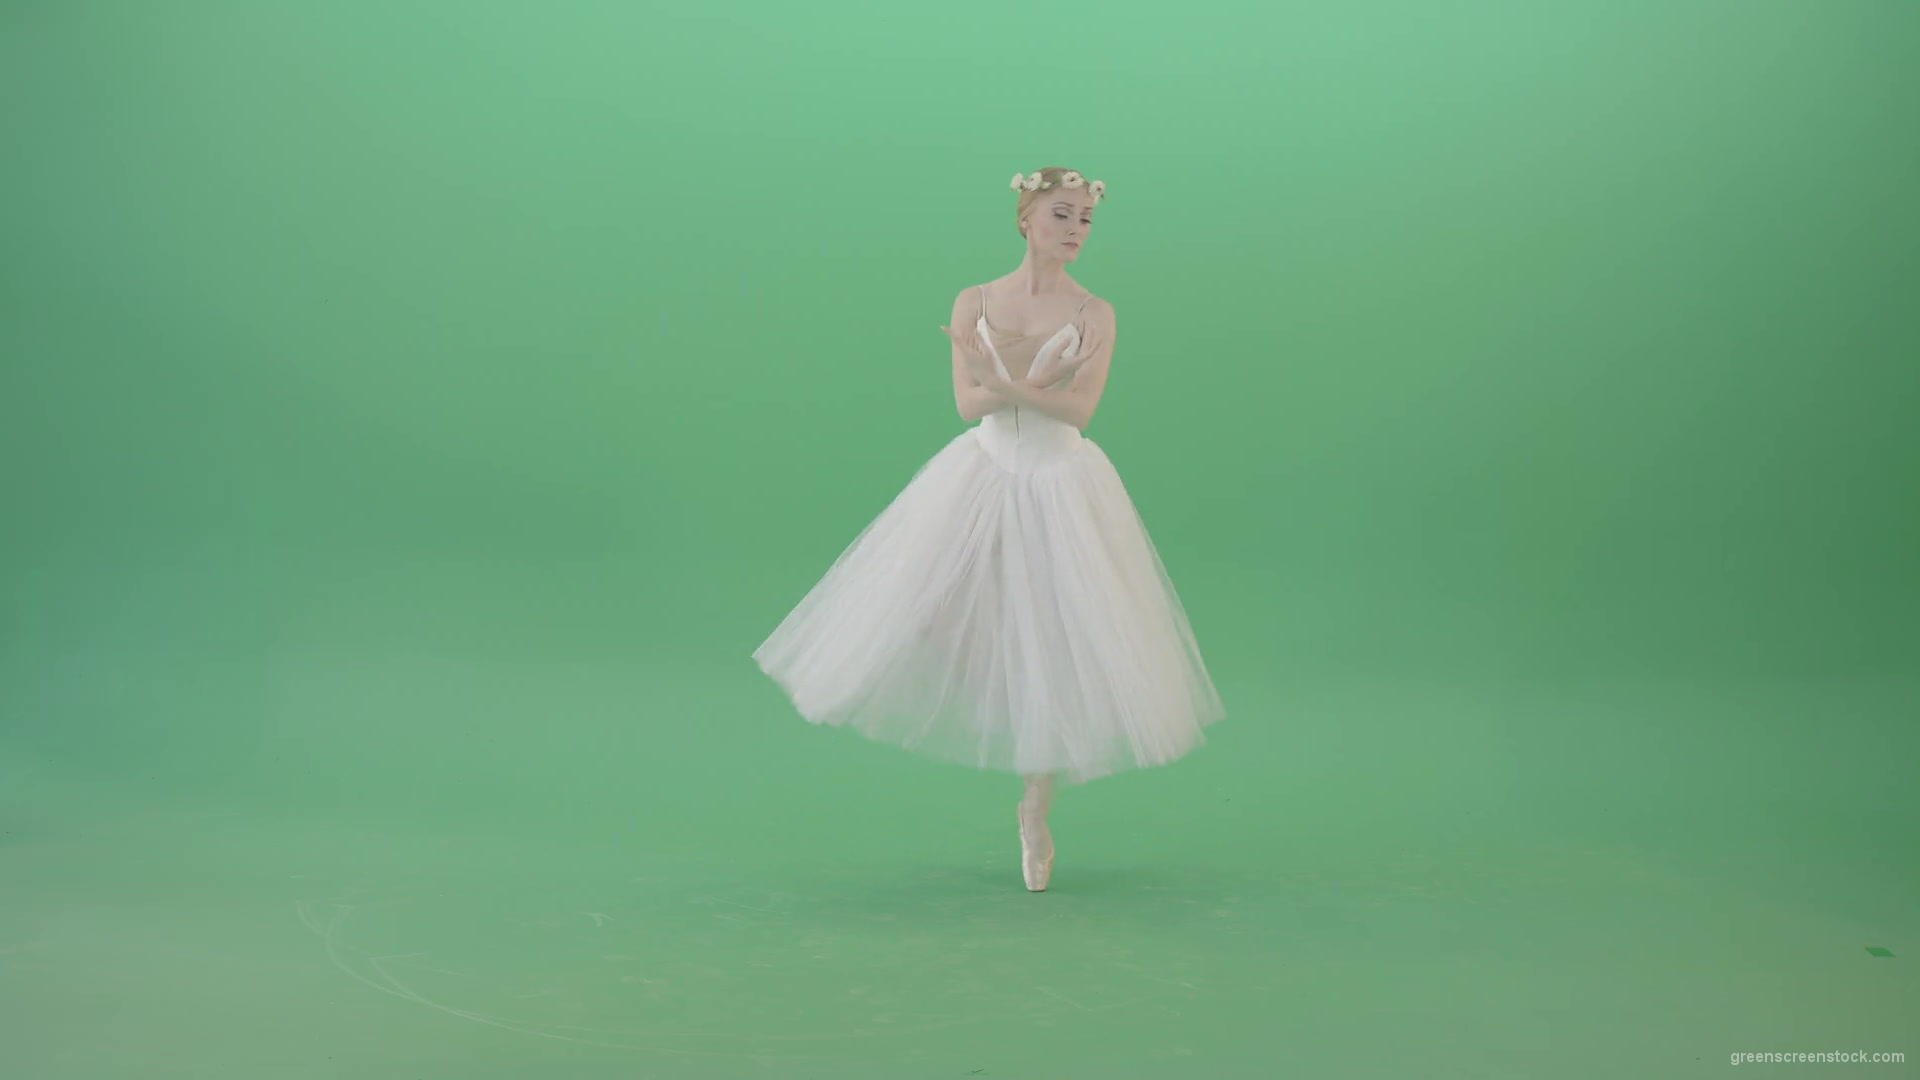 Beautiful-jumping-ballet-dancing-girl-choreograph-jumps-on-green-screen-4K-Video-Footage-1920_008 Green Screen Stock